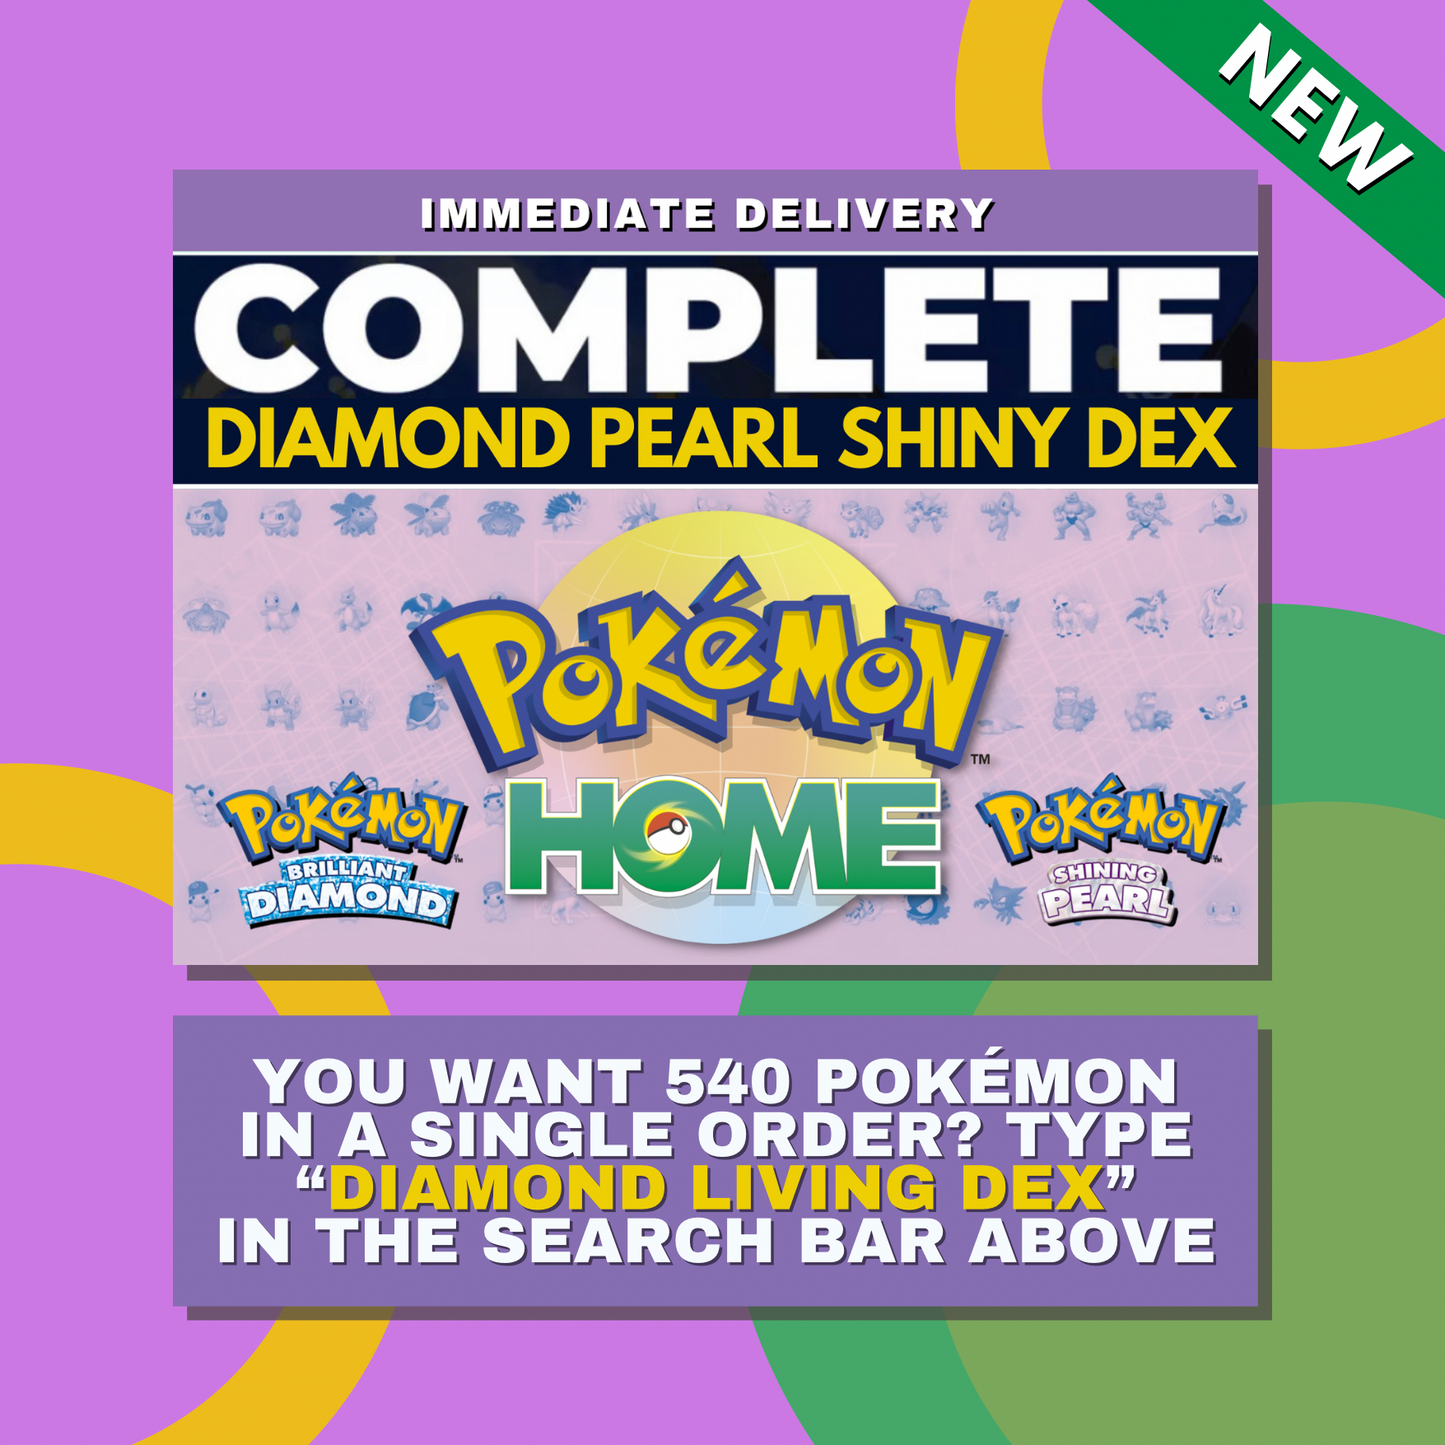 Gliscor   Shiny ✨ or Non Shiny Pokémon Brilliant Diamond Shining Pearl Battle Ready 6 IV Competitive 100%  Legit Level 100 Customizable Custom OT